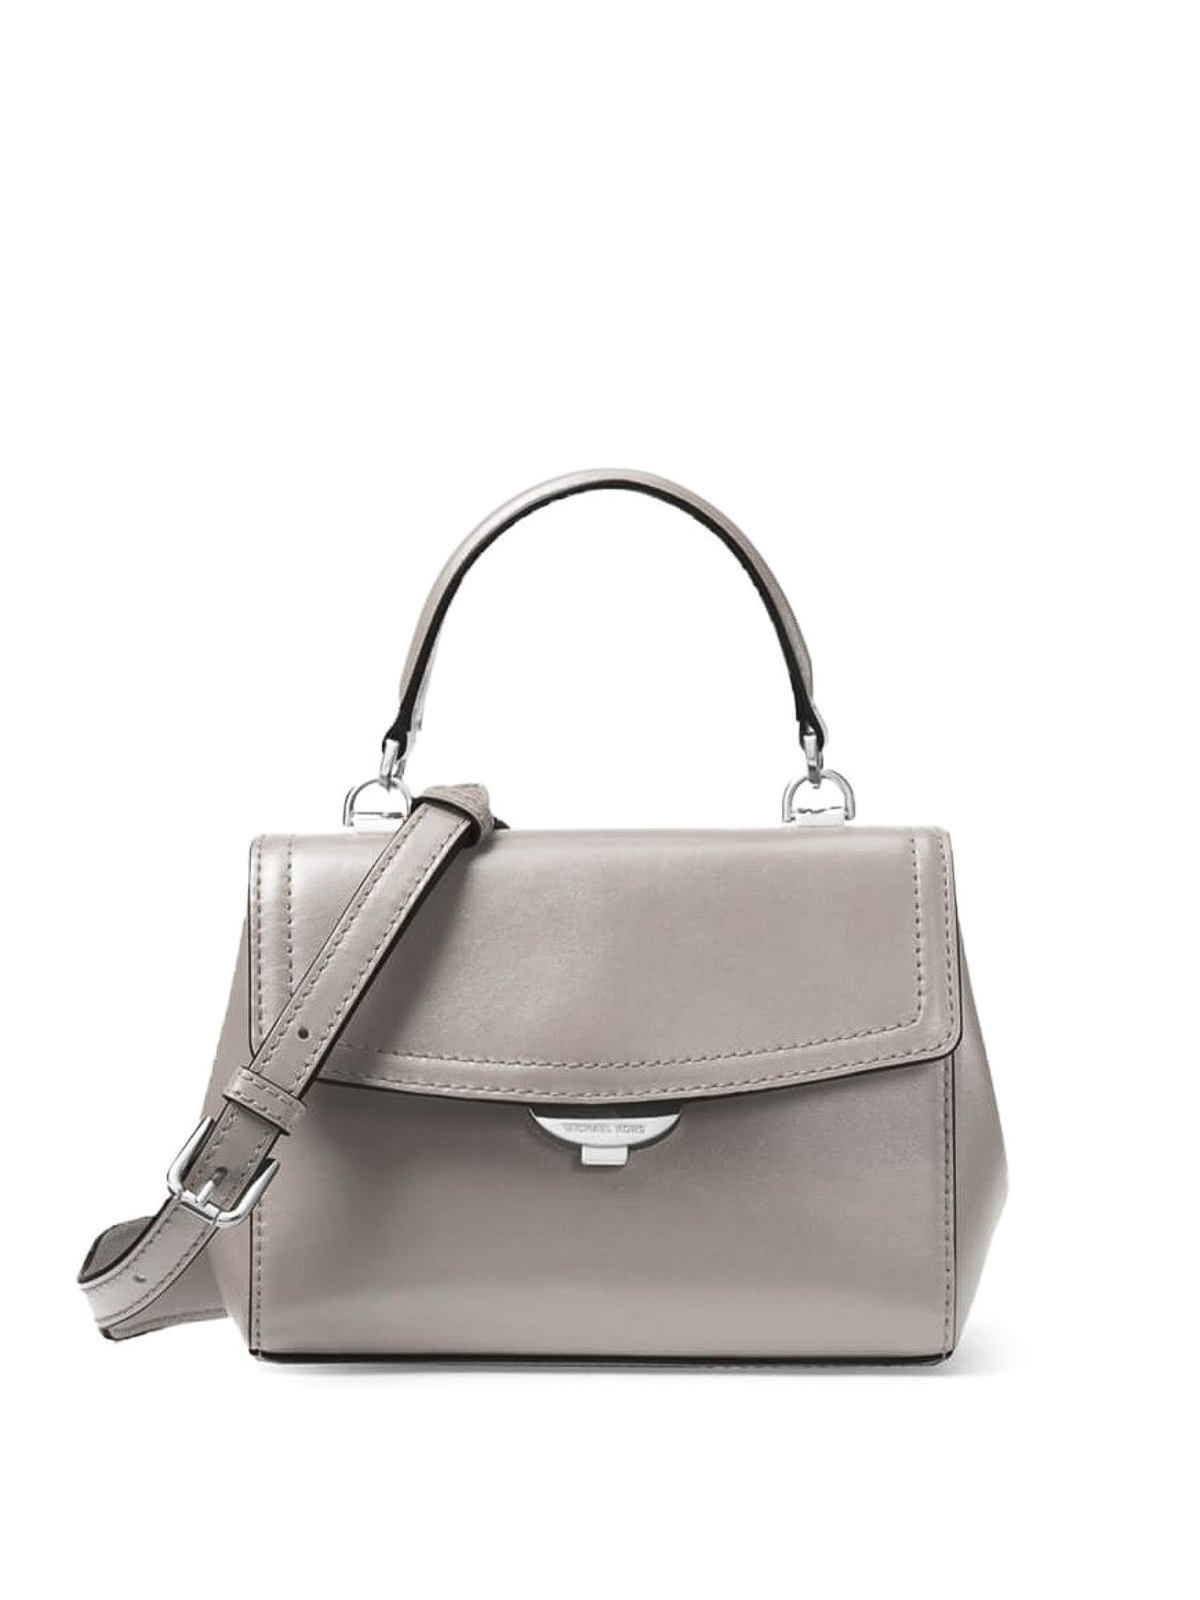 grey leather michael kors purse